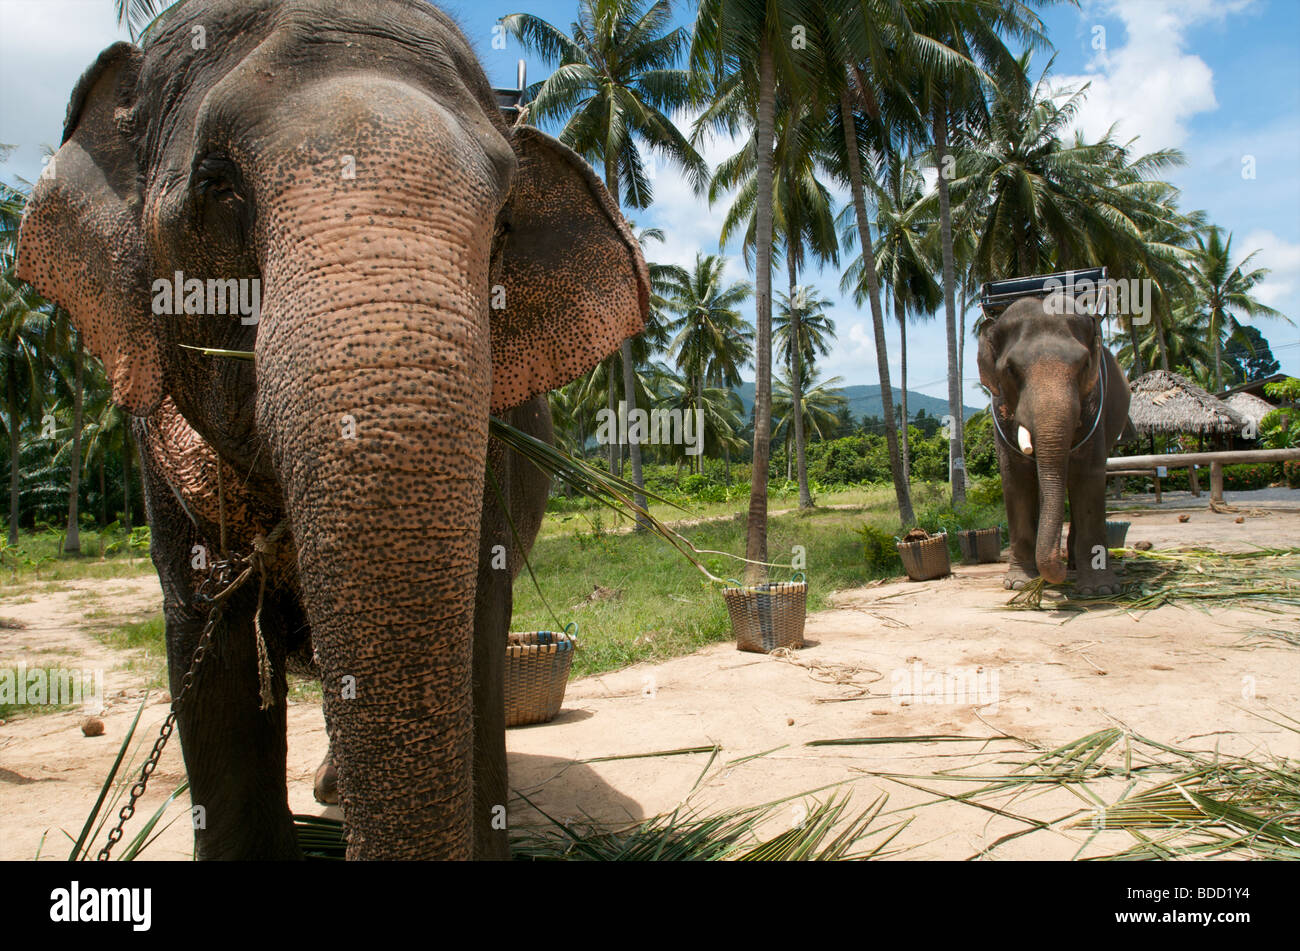 two elephants feeding on palm leaves on the island of Koh Samui Thailand Stock Photo